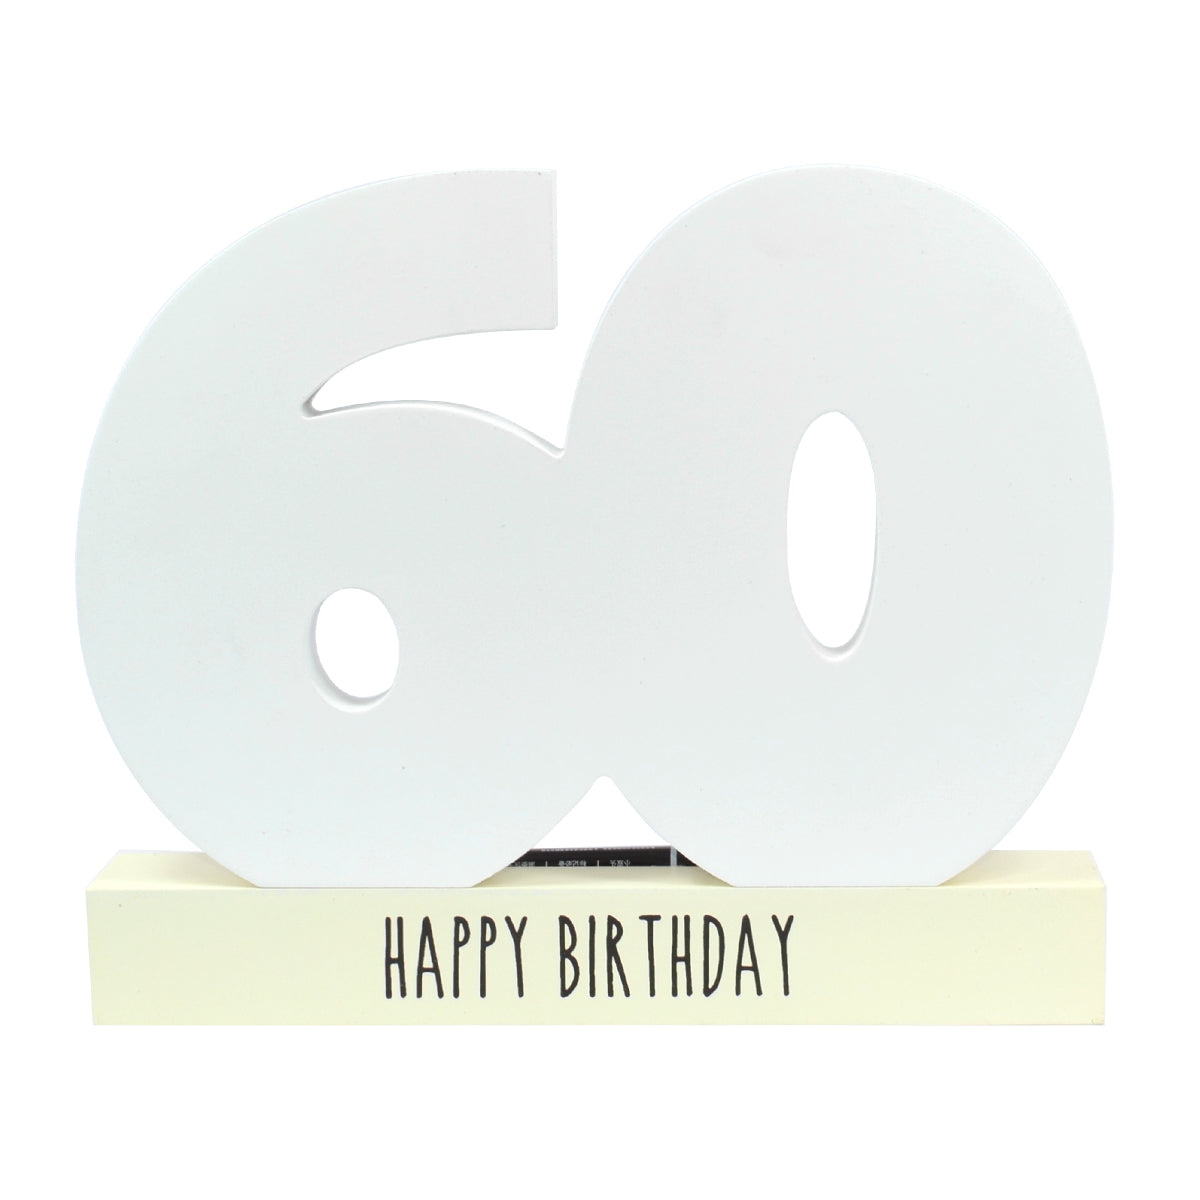 Age 60 Signature Block 60th Birthday Pen Included